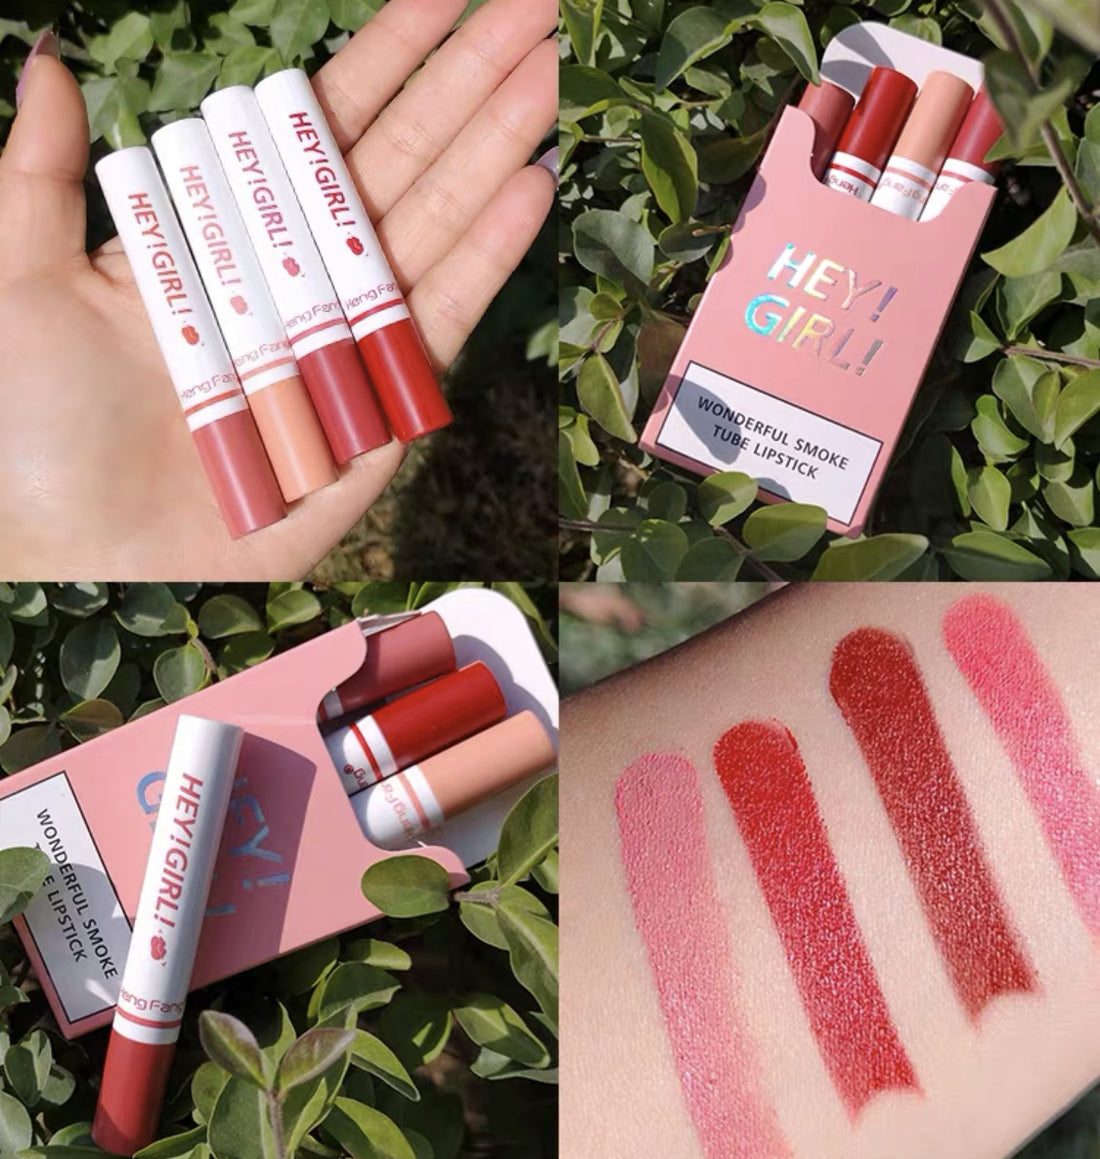 Four sets of lipsticks lasting moisturizing